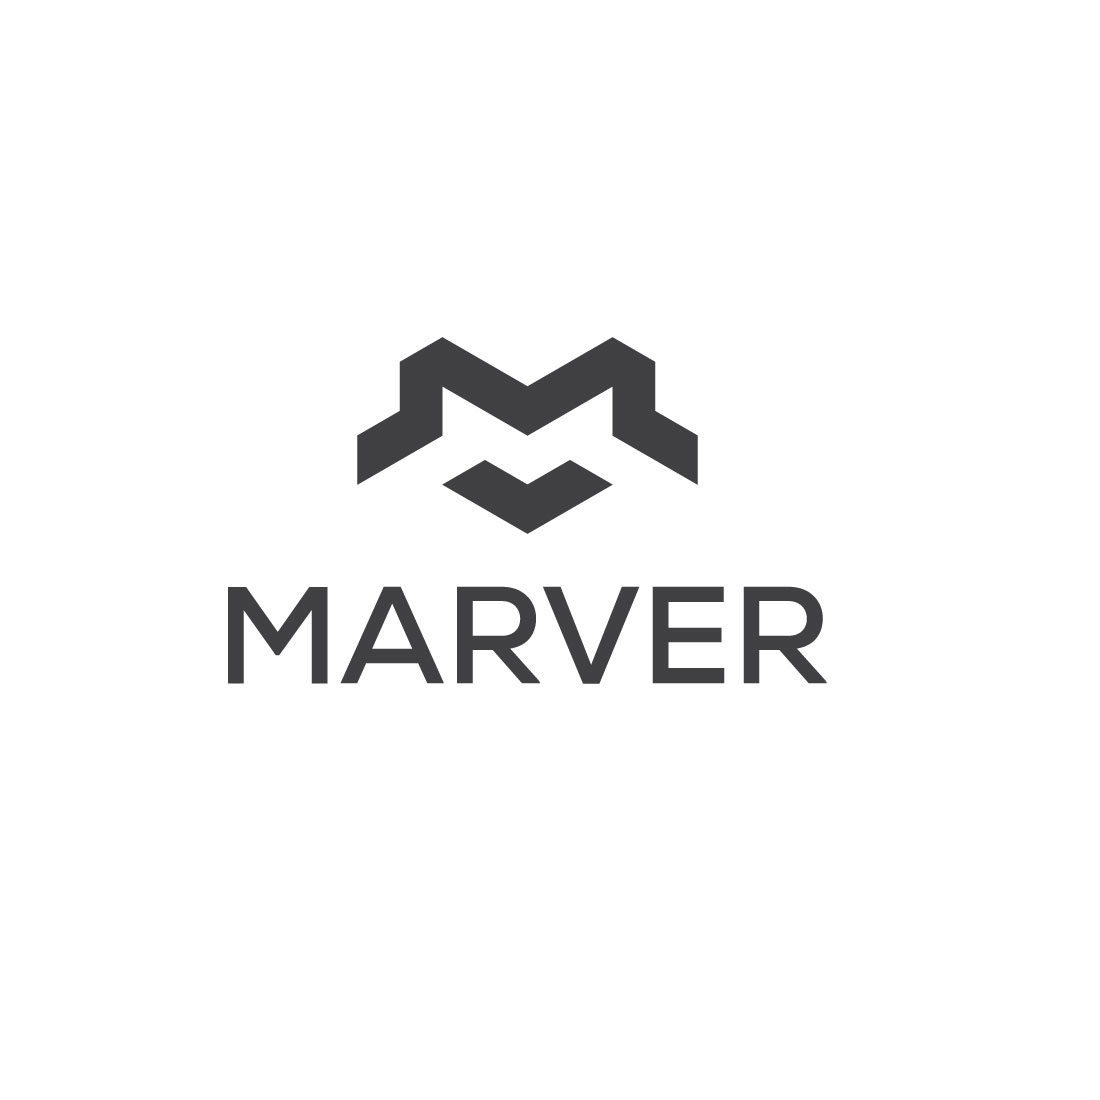 M Letter Logo Design cover image.